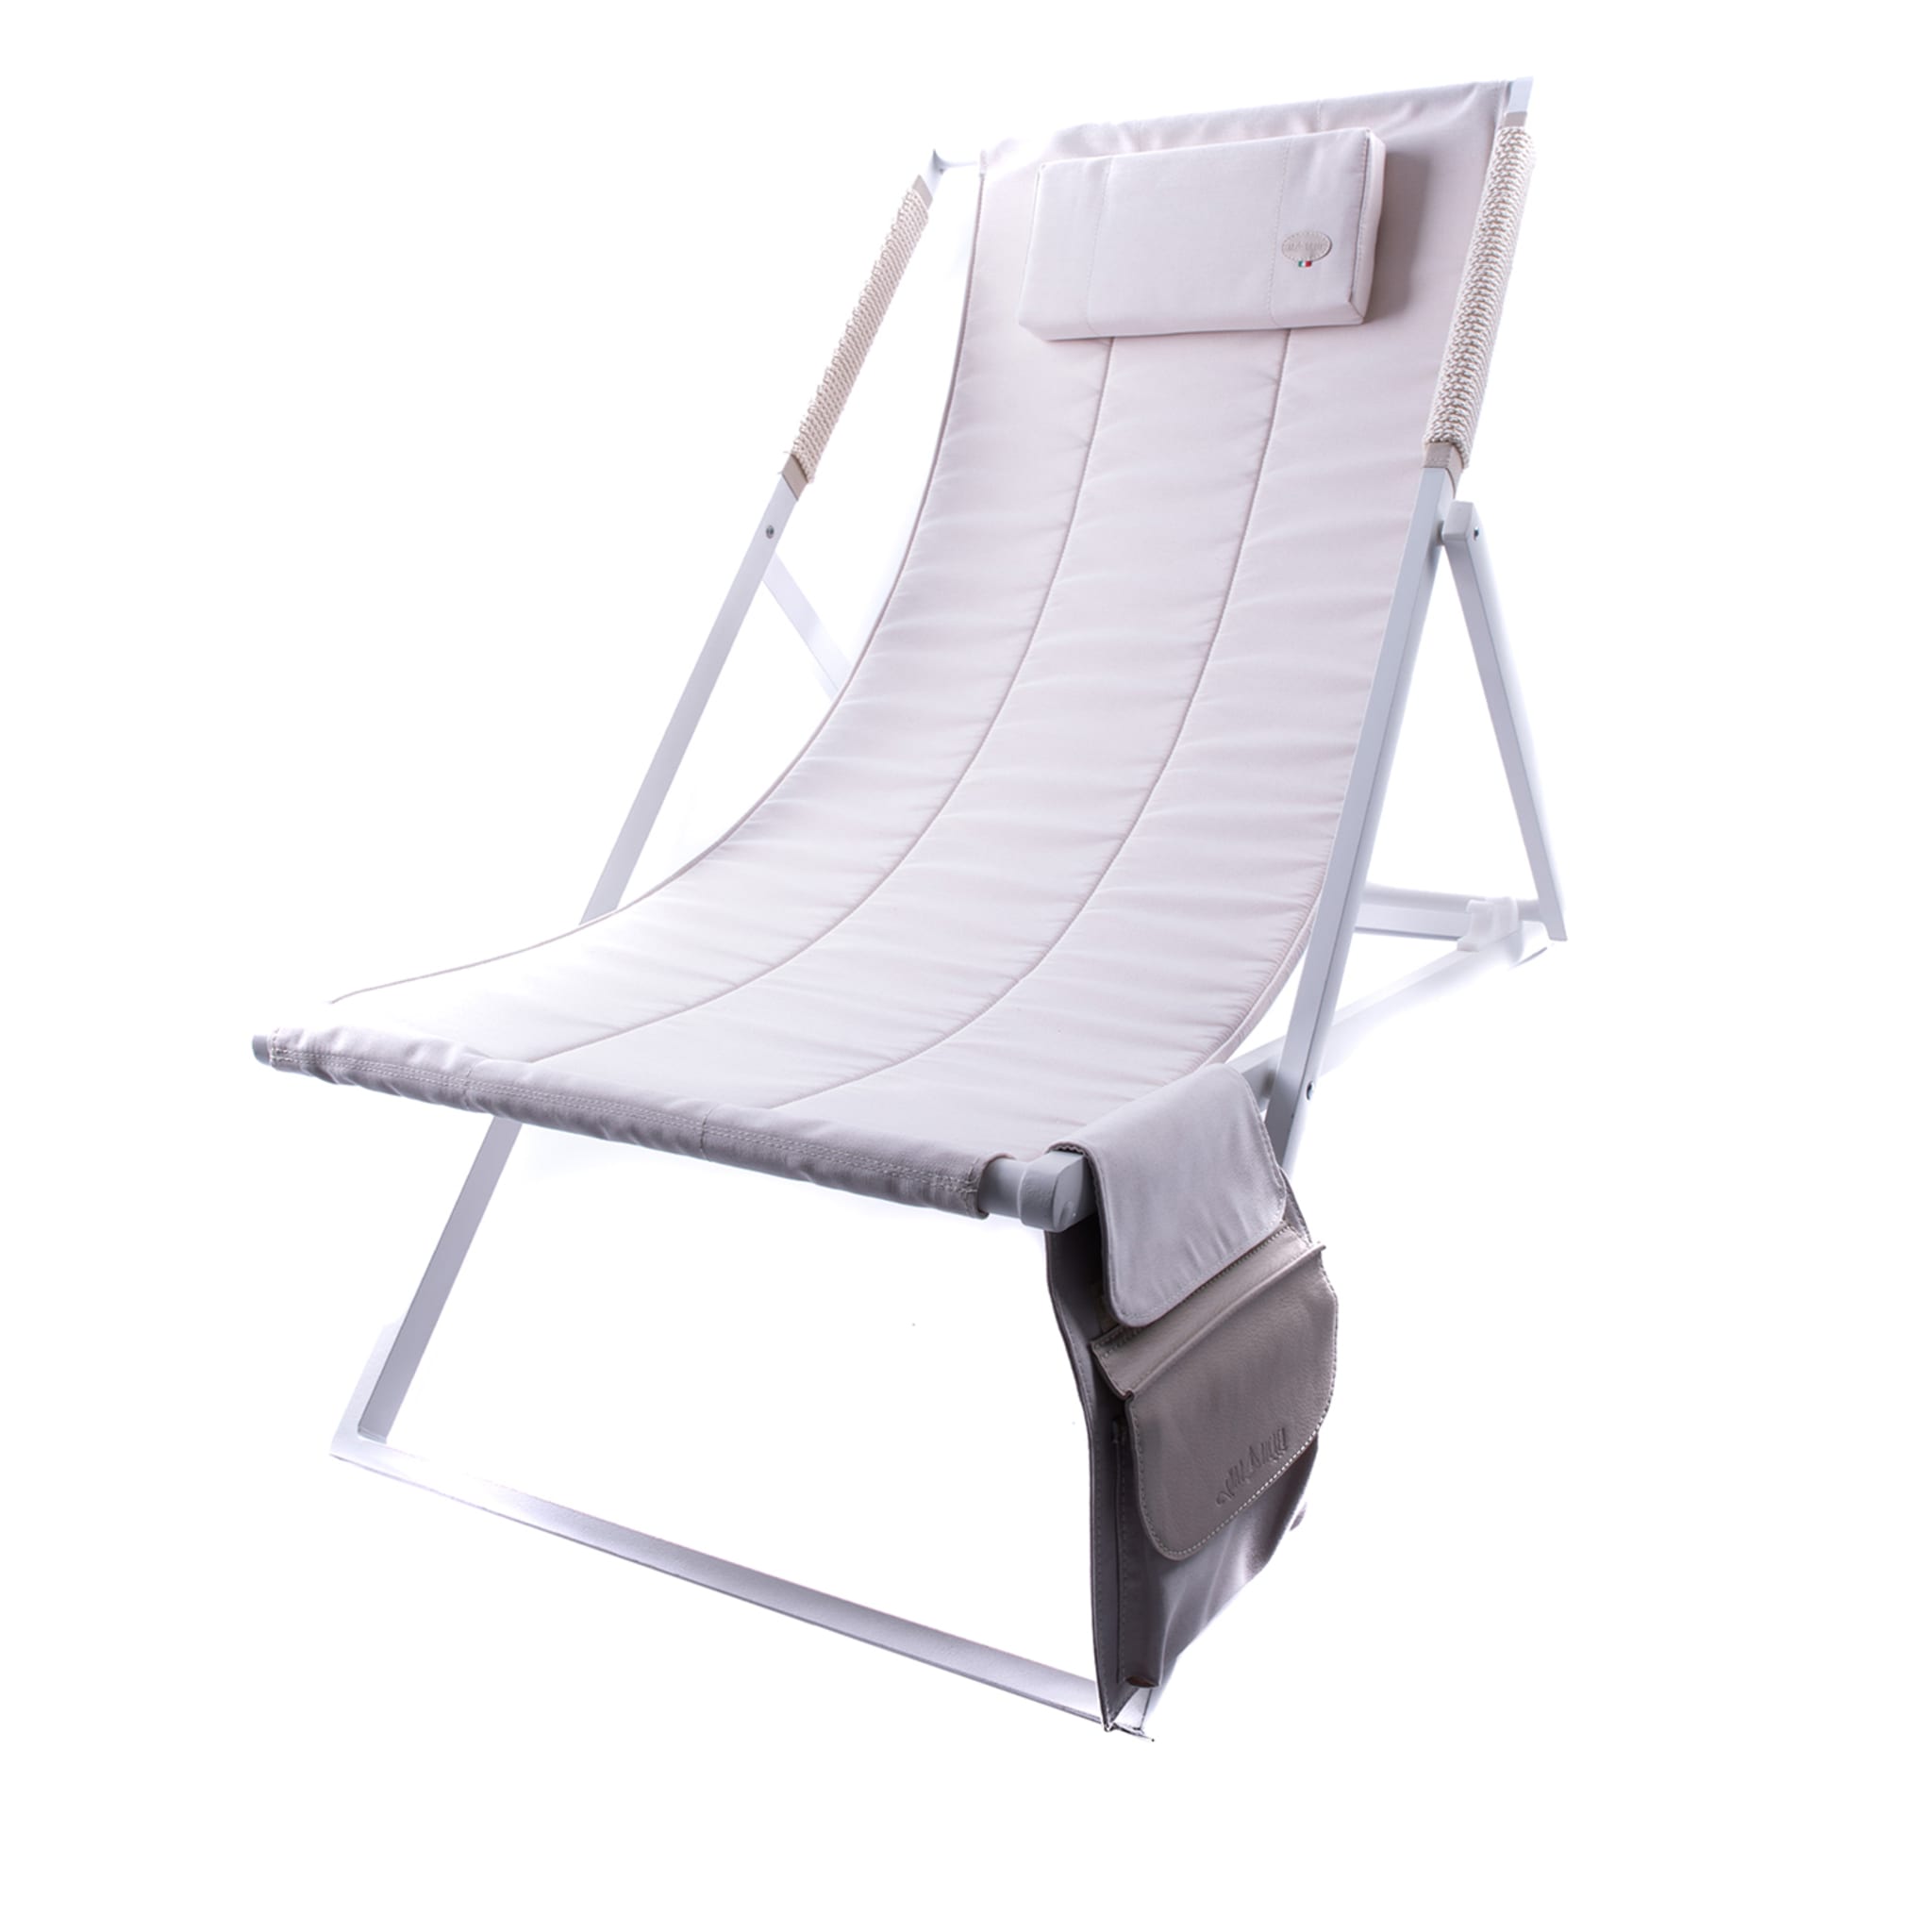 Cream and White Deck Chair - Main view